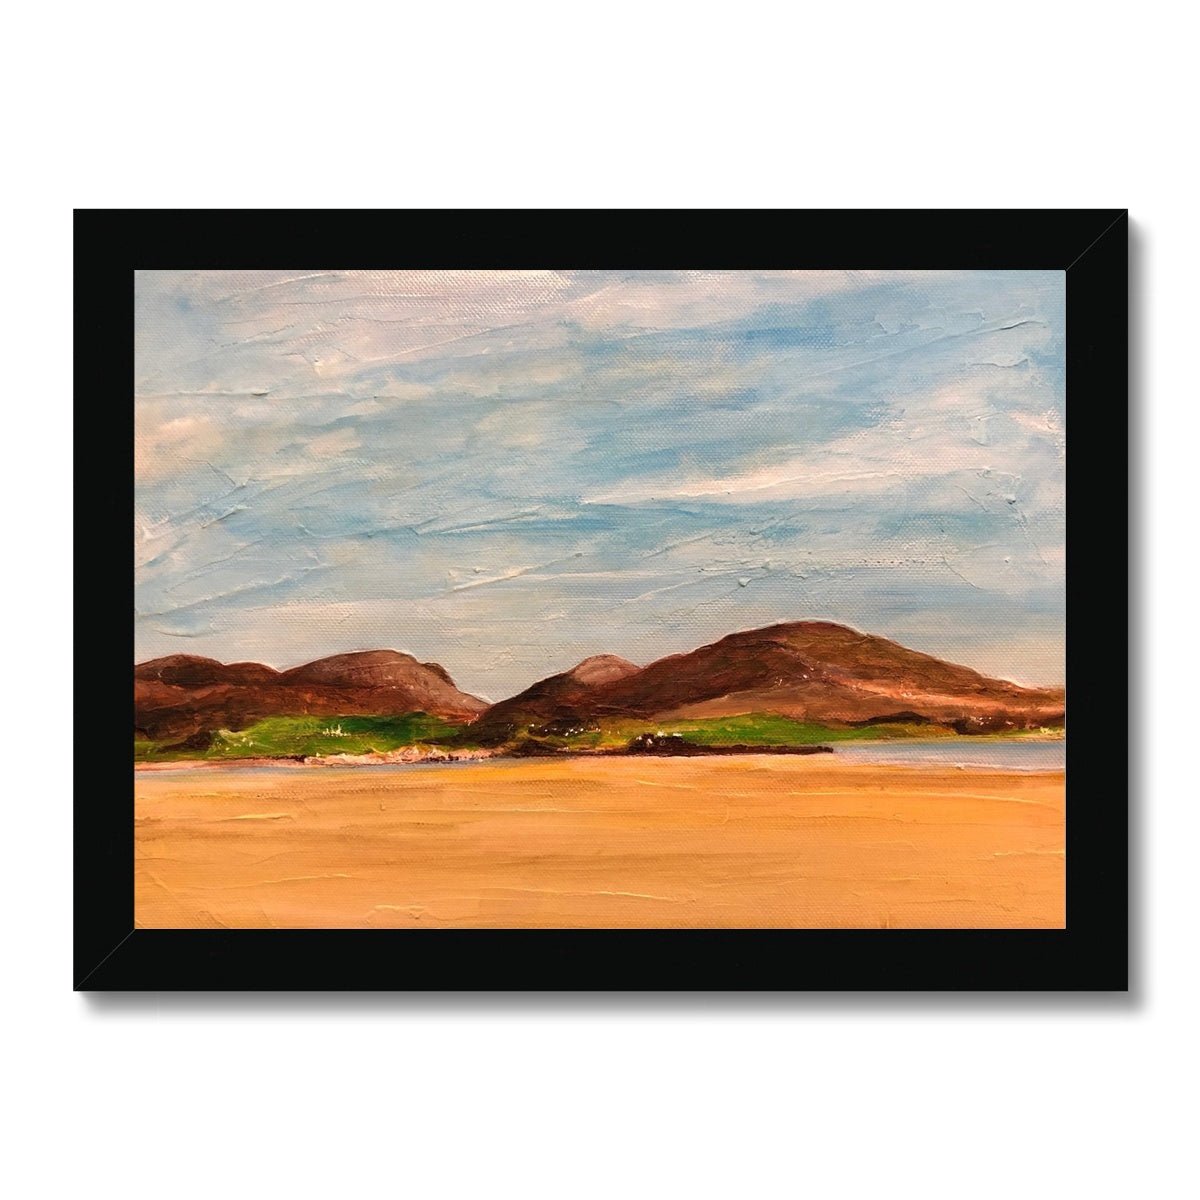 Uig Sands Lewis Painting | Framed Prints From Scotland-Framed Prints-Hebridean Islands Art Gallery-A4 Landscape-Black Frame-Paintings, Prints, Homeware, Art Gifts From Scotland By Scottish Artist Kevin Hunter